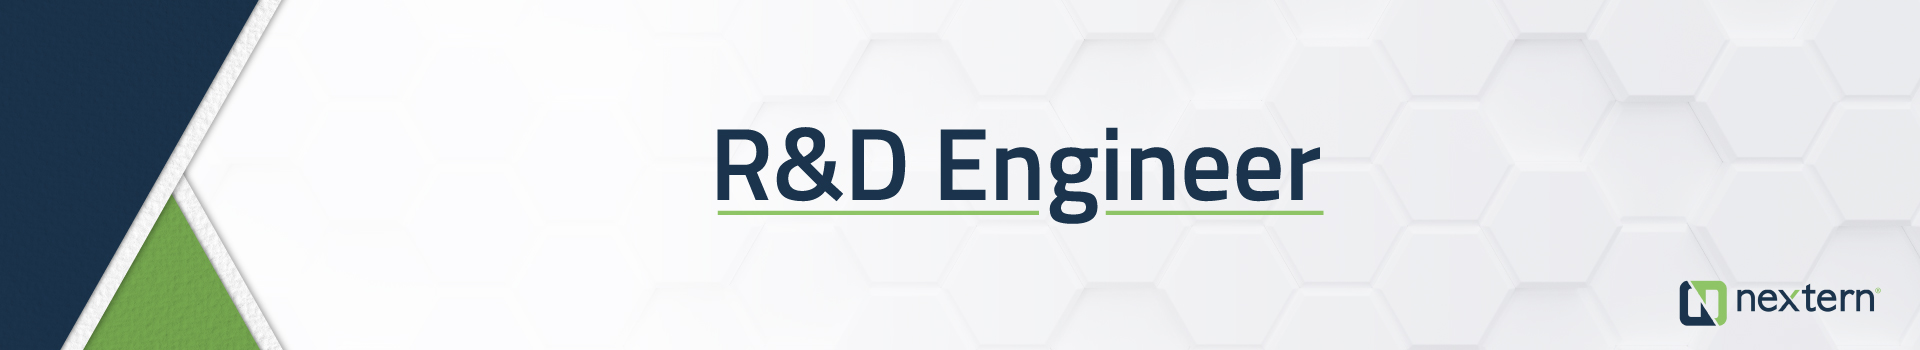 Nextern website banner features text "R&D Engineer" with Nextern logo